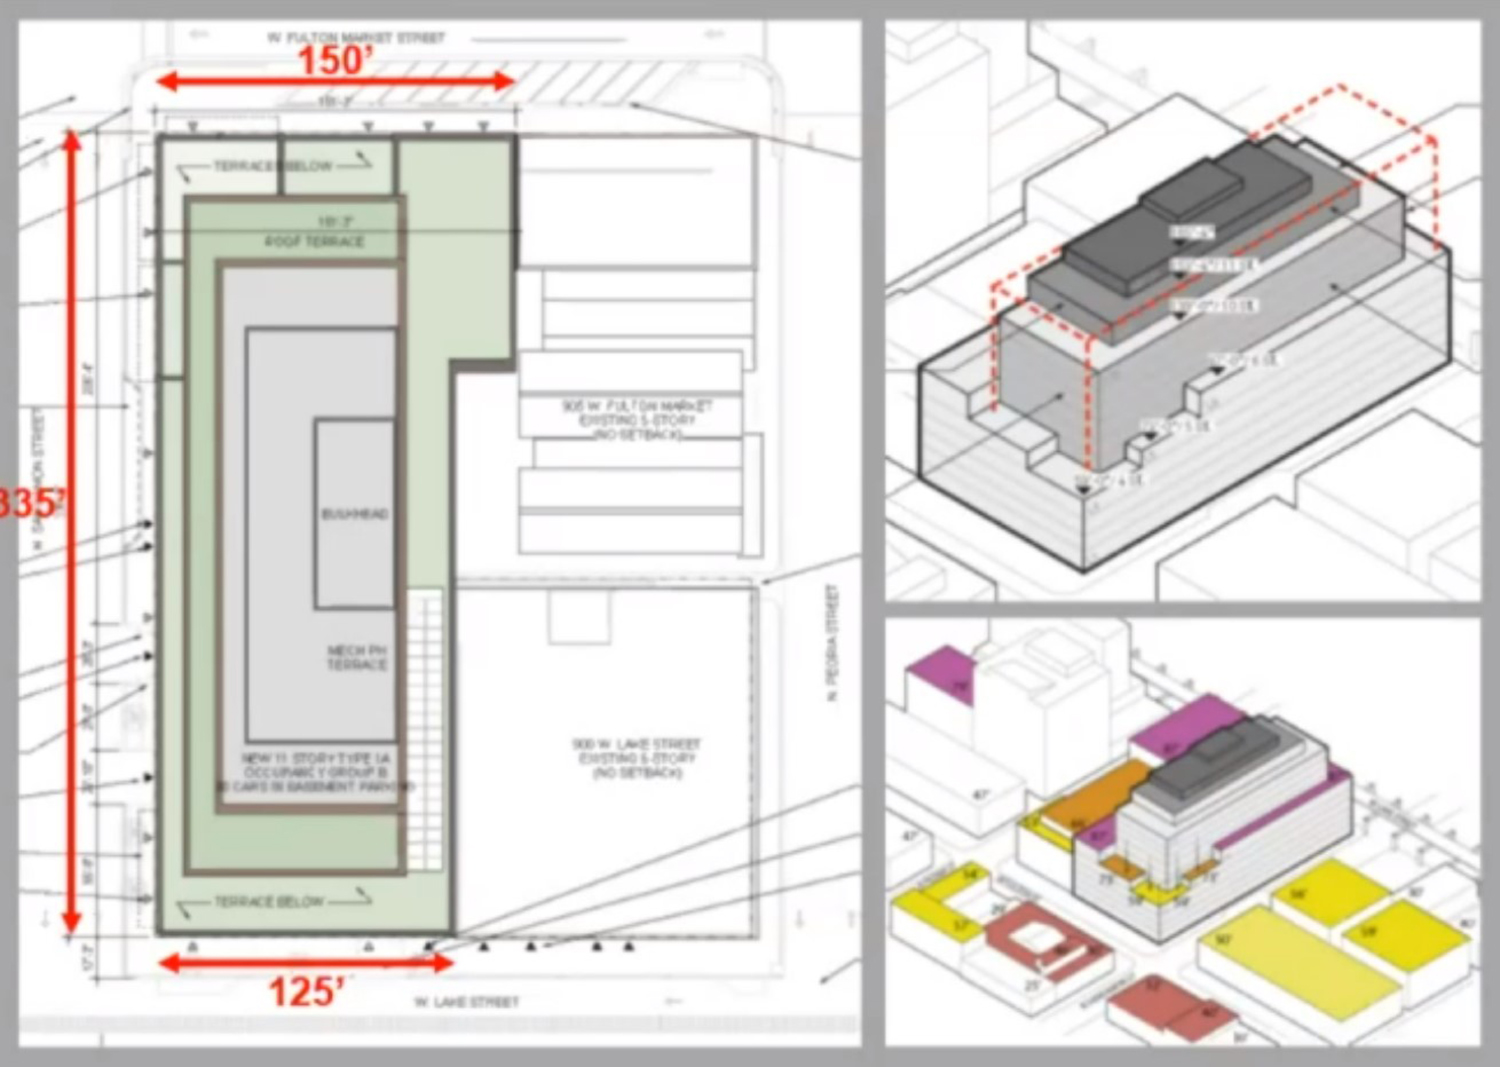 Massing Diagrams of 917 W Fulton Market. Diagrams by Morris Adjmi Architects